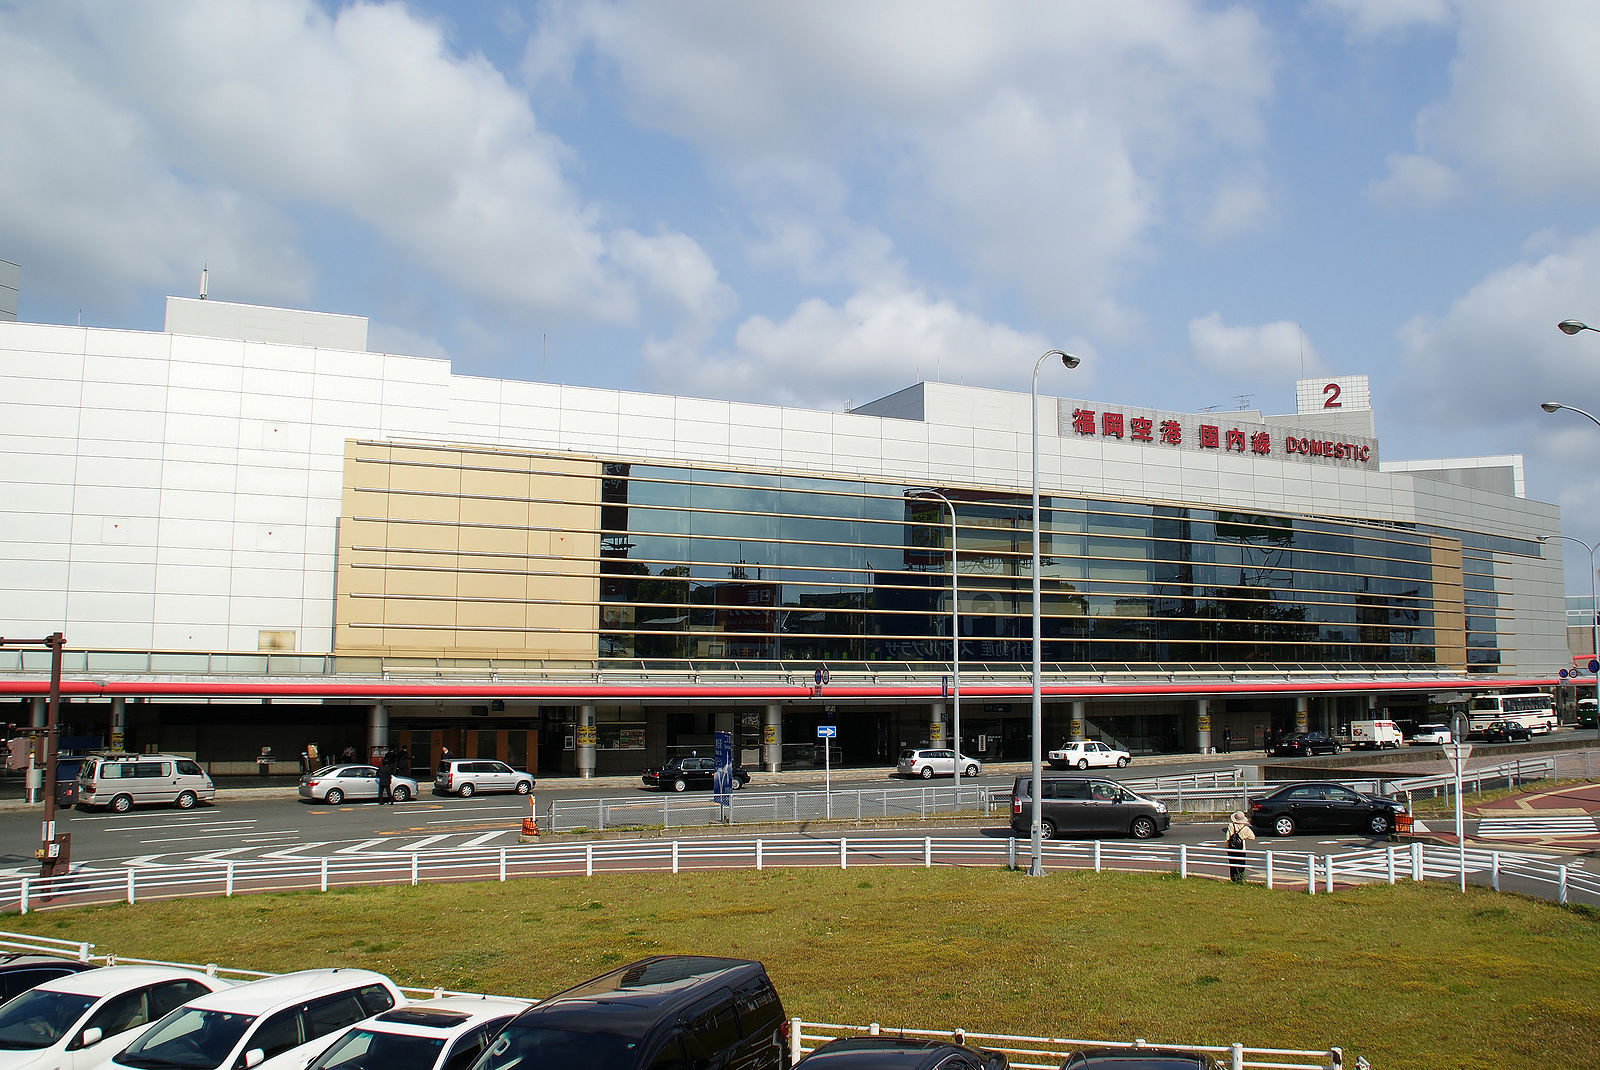 Fukuoka Airport (FUK) serves Fukuoka, Japan.